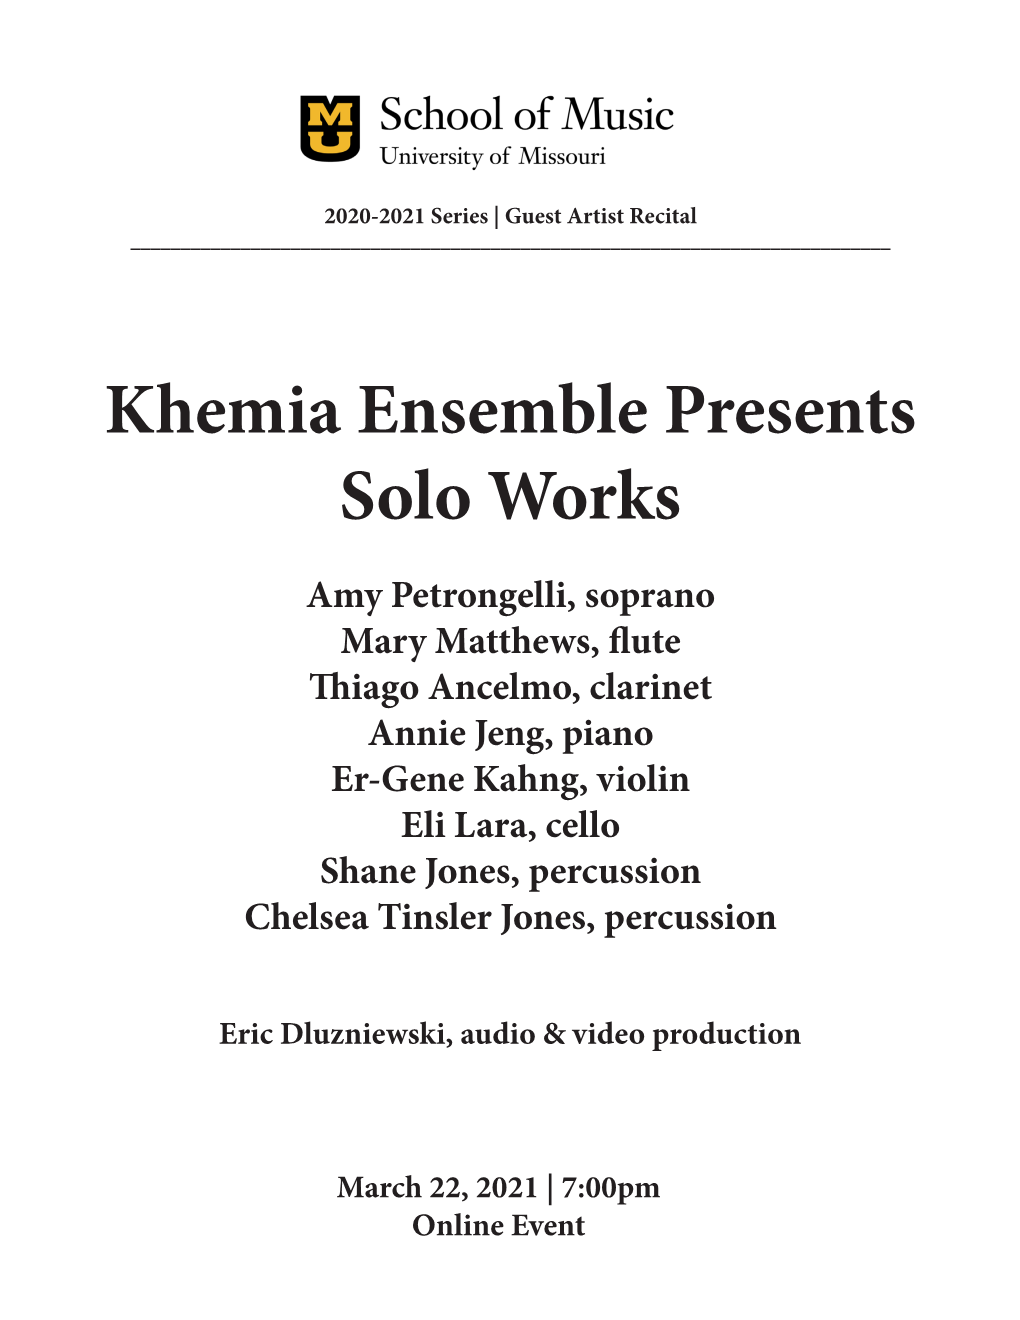 Khemia Ensemble Presents Solo Works